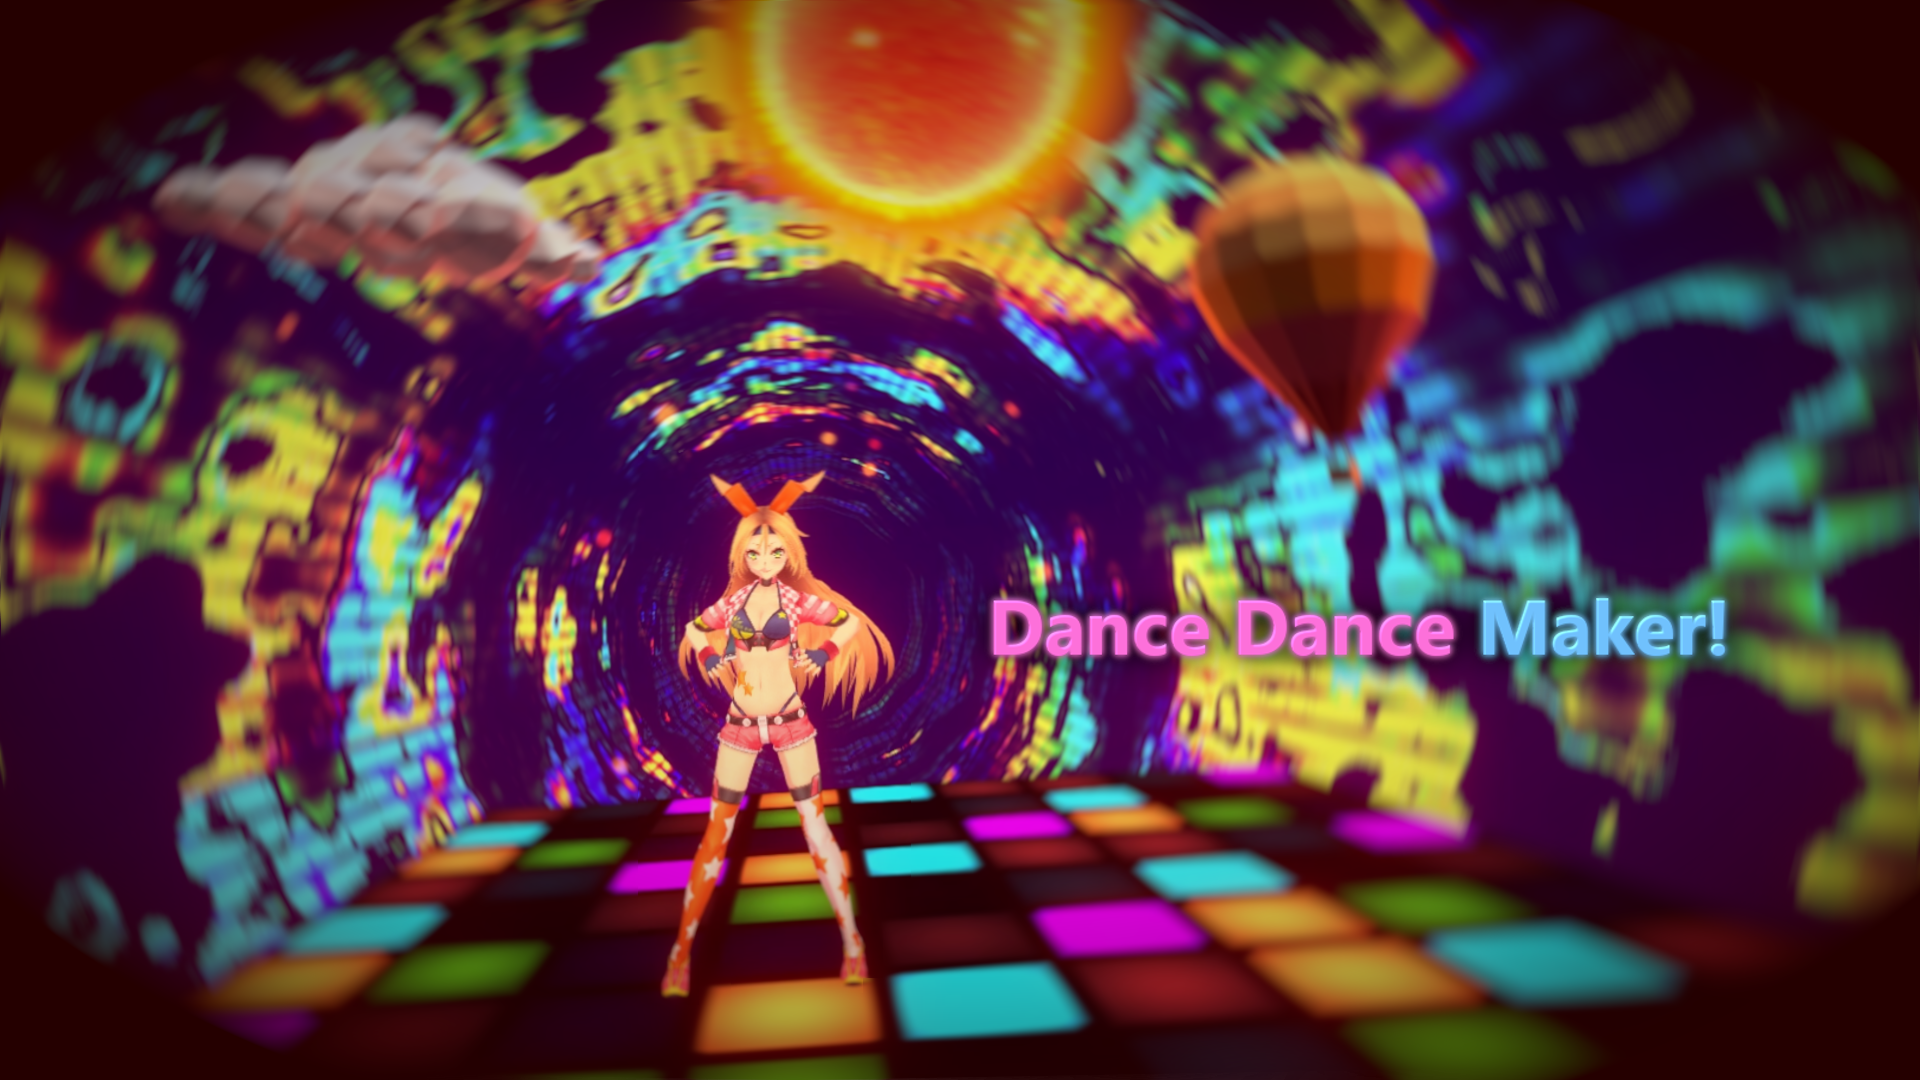 Dance Dance Maker! - VR game for Oculus Quest